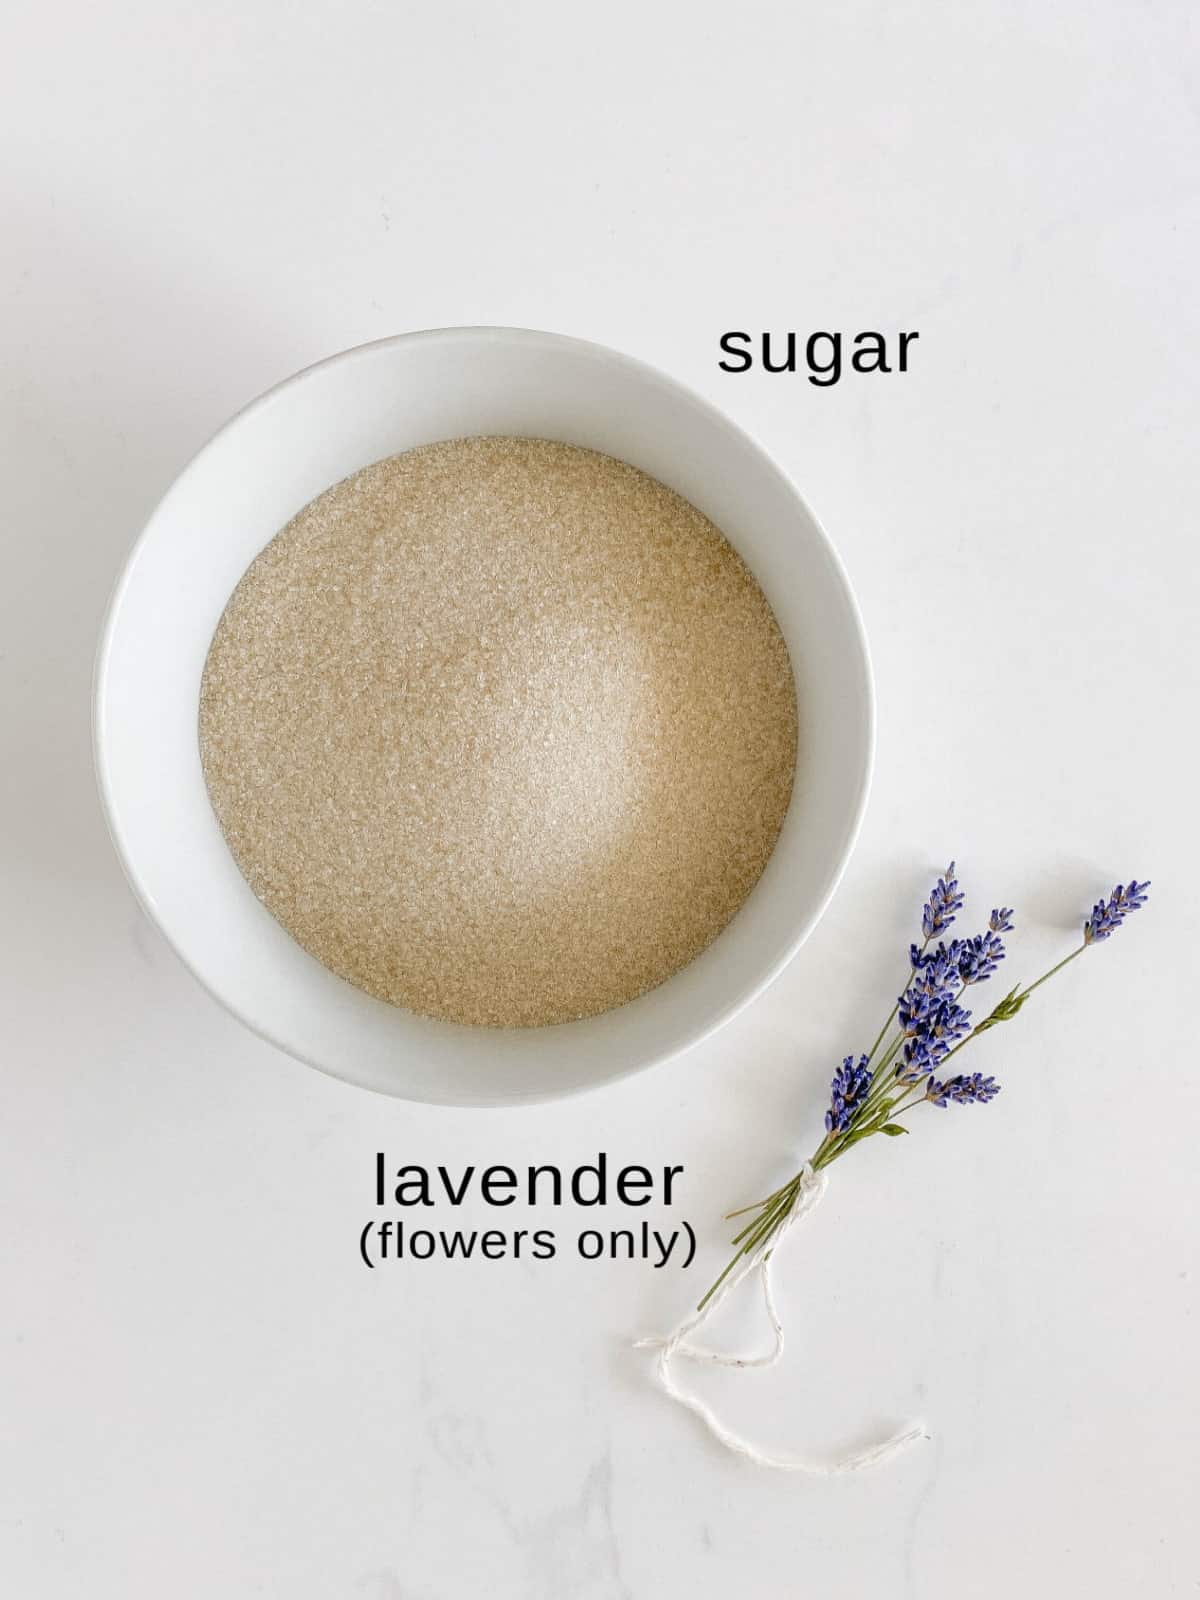 Lavender Sugar ingredients on a white background.